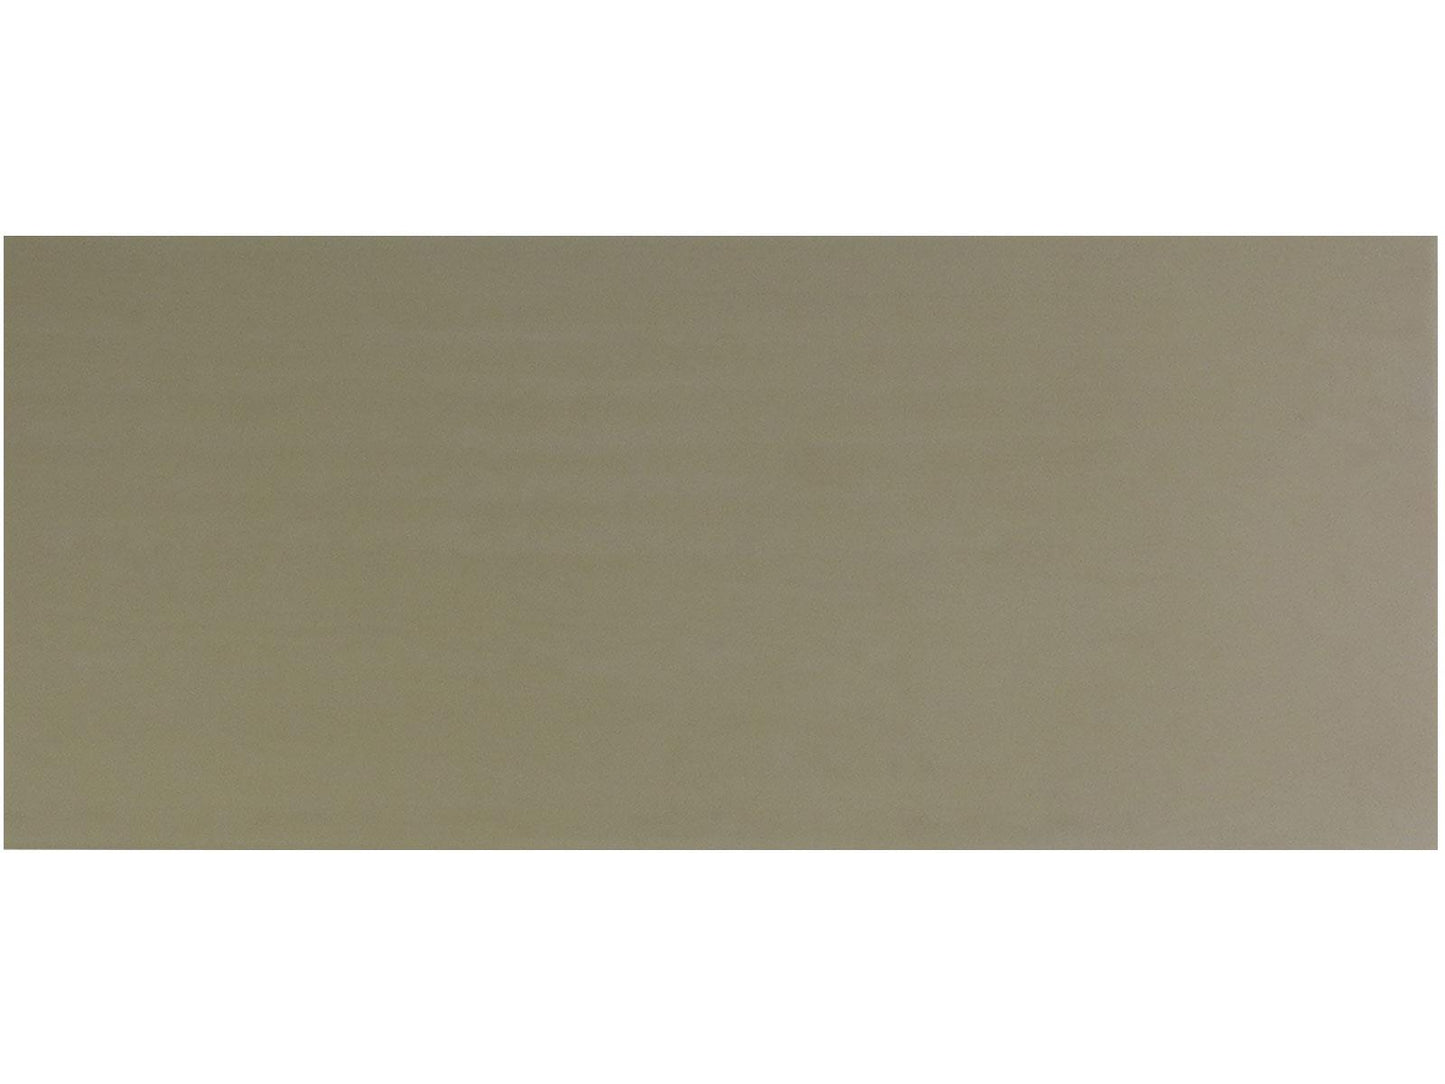 Incudo (Col 386) Ivory Casein (Galalith) Sheet - 240x100x3mm (9.4x3.94x0.12")